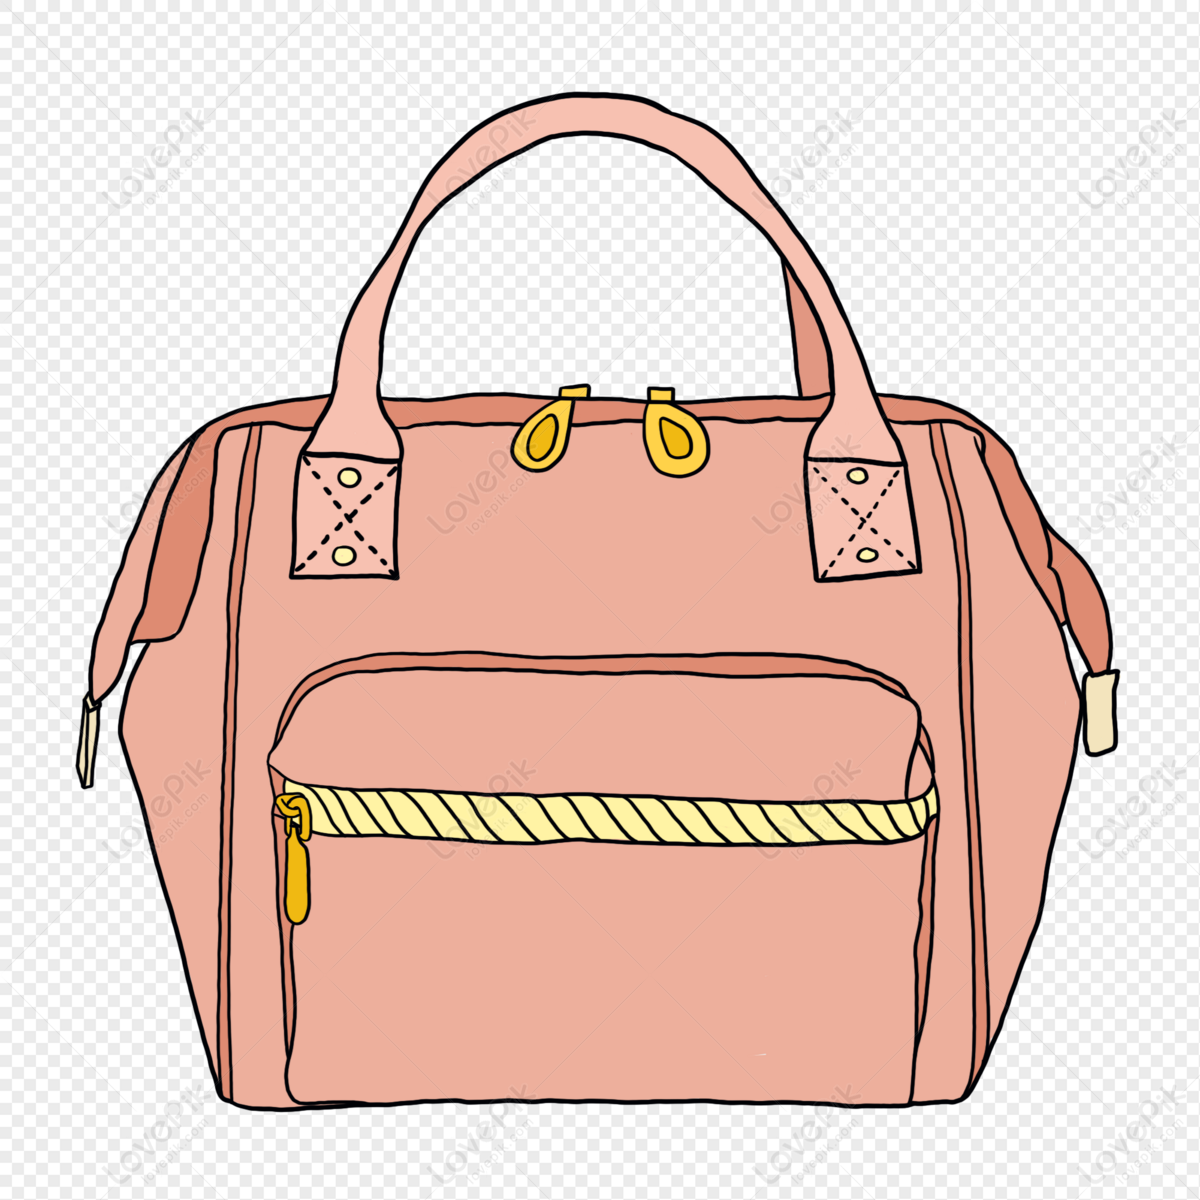 Lady Bag Hd Transparent, A Bag Gray Handbag Lady Bag, Bag, Lady Bags, Female  PNG Image For Free Download